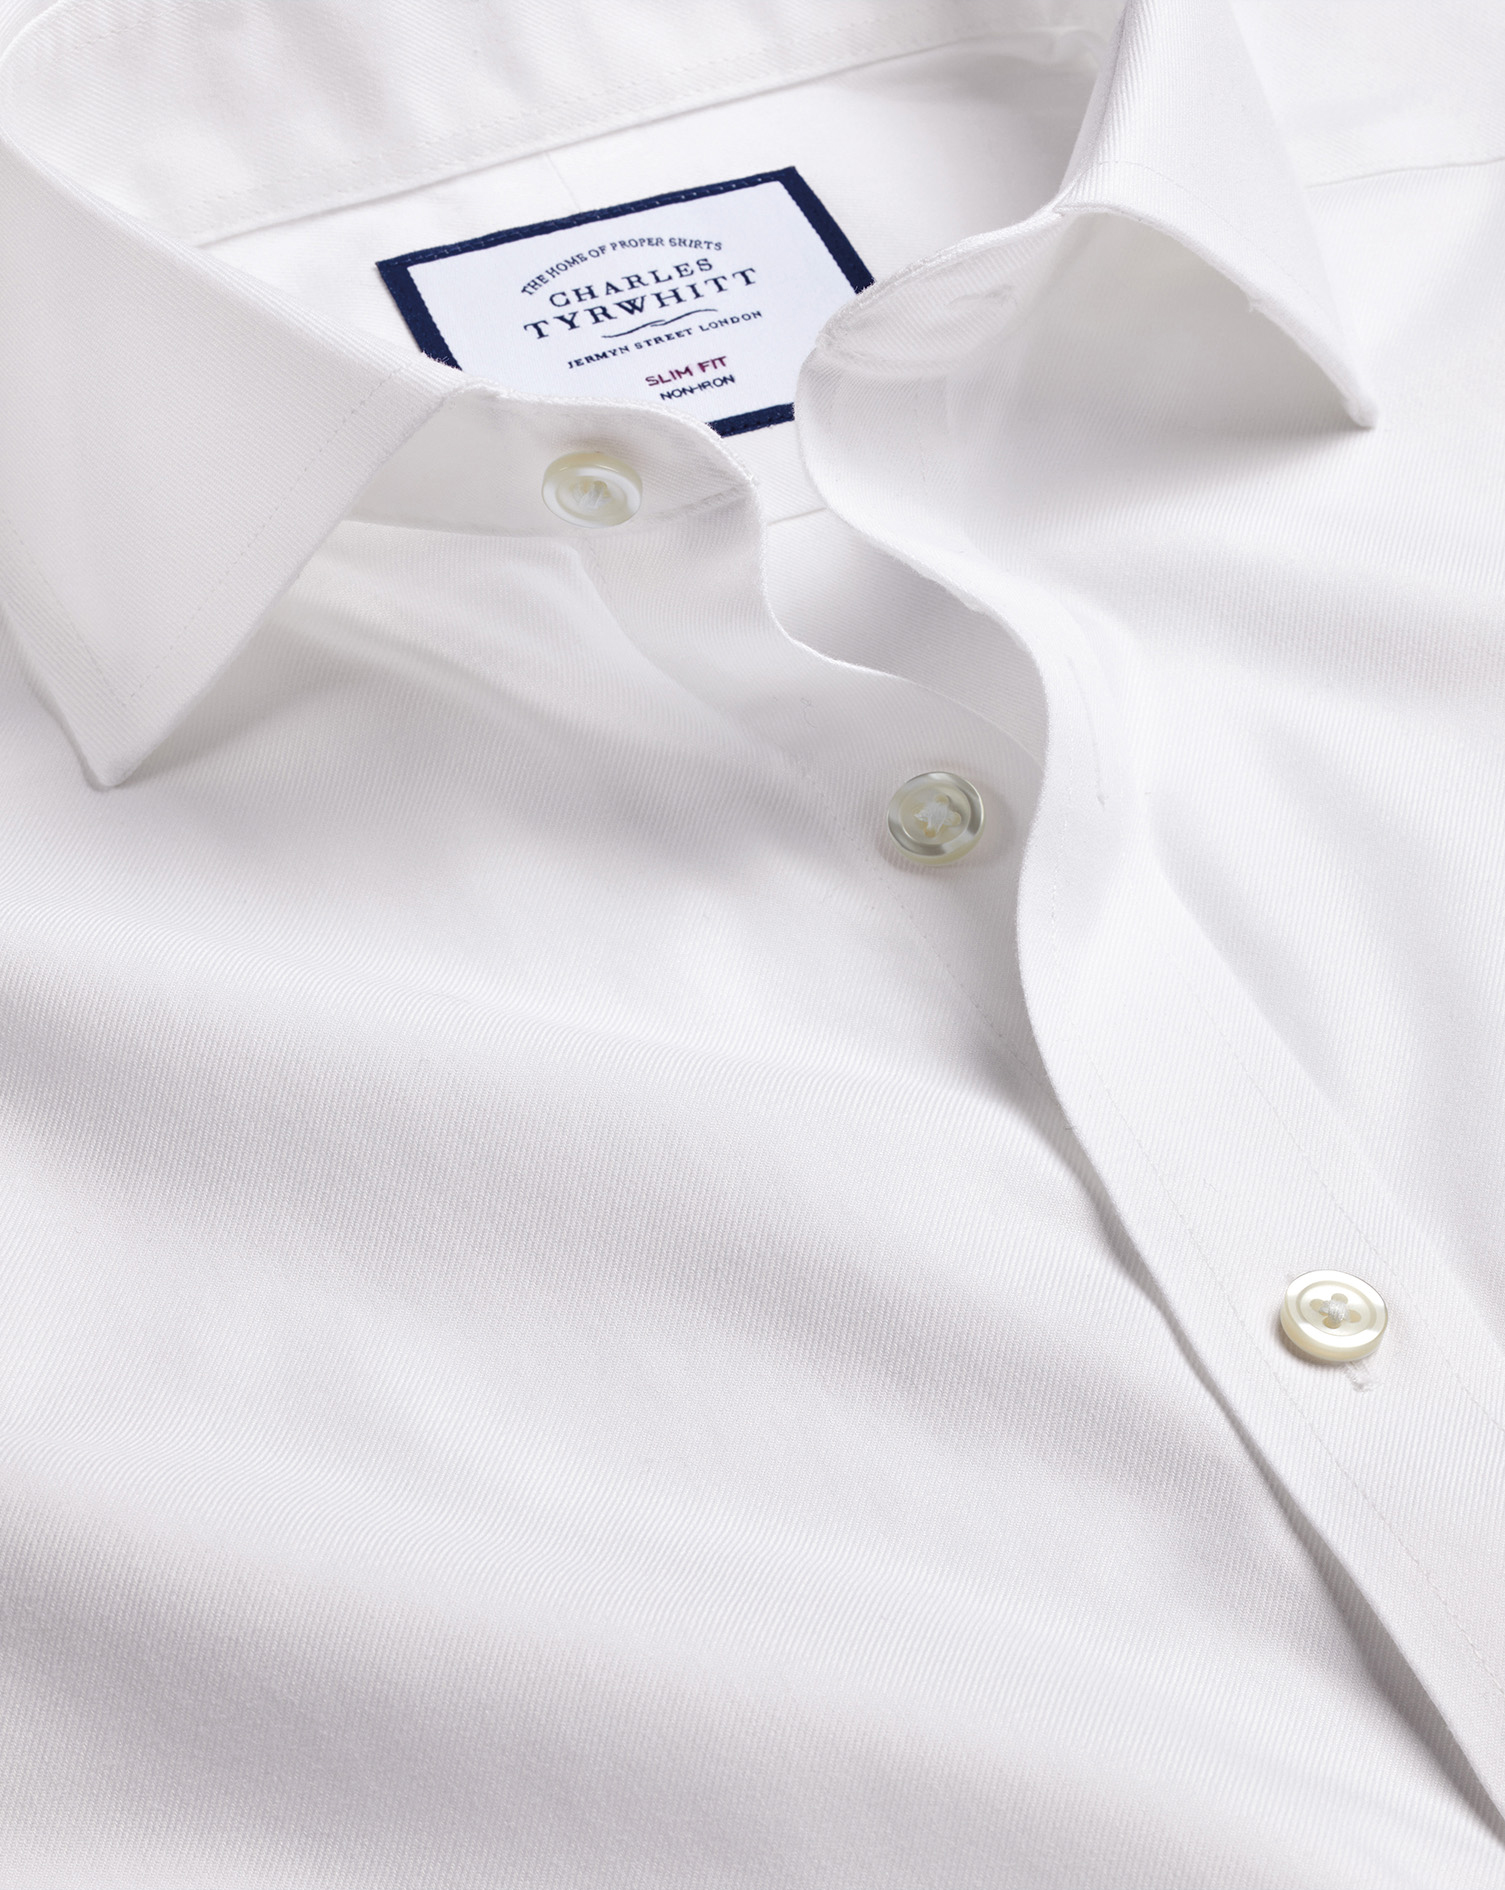 Charles Tyrwhitt Charles Tyrwhitt classic fit shirt 16.5 /35 inch neck with cuffs for cufflinks 